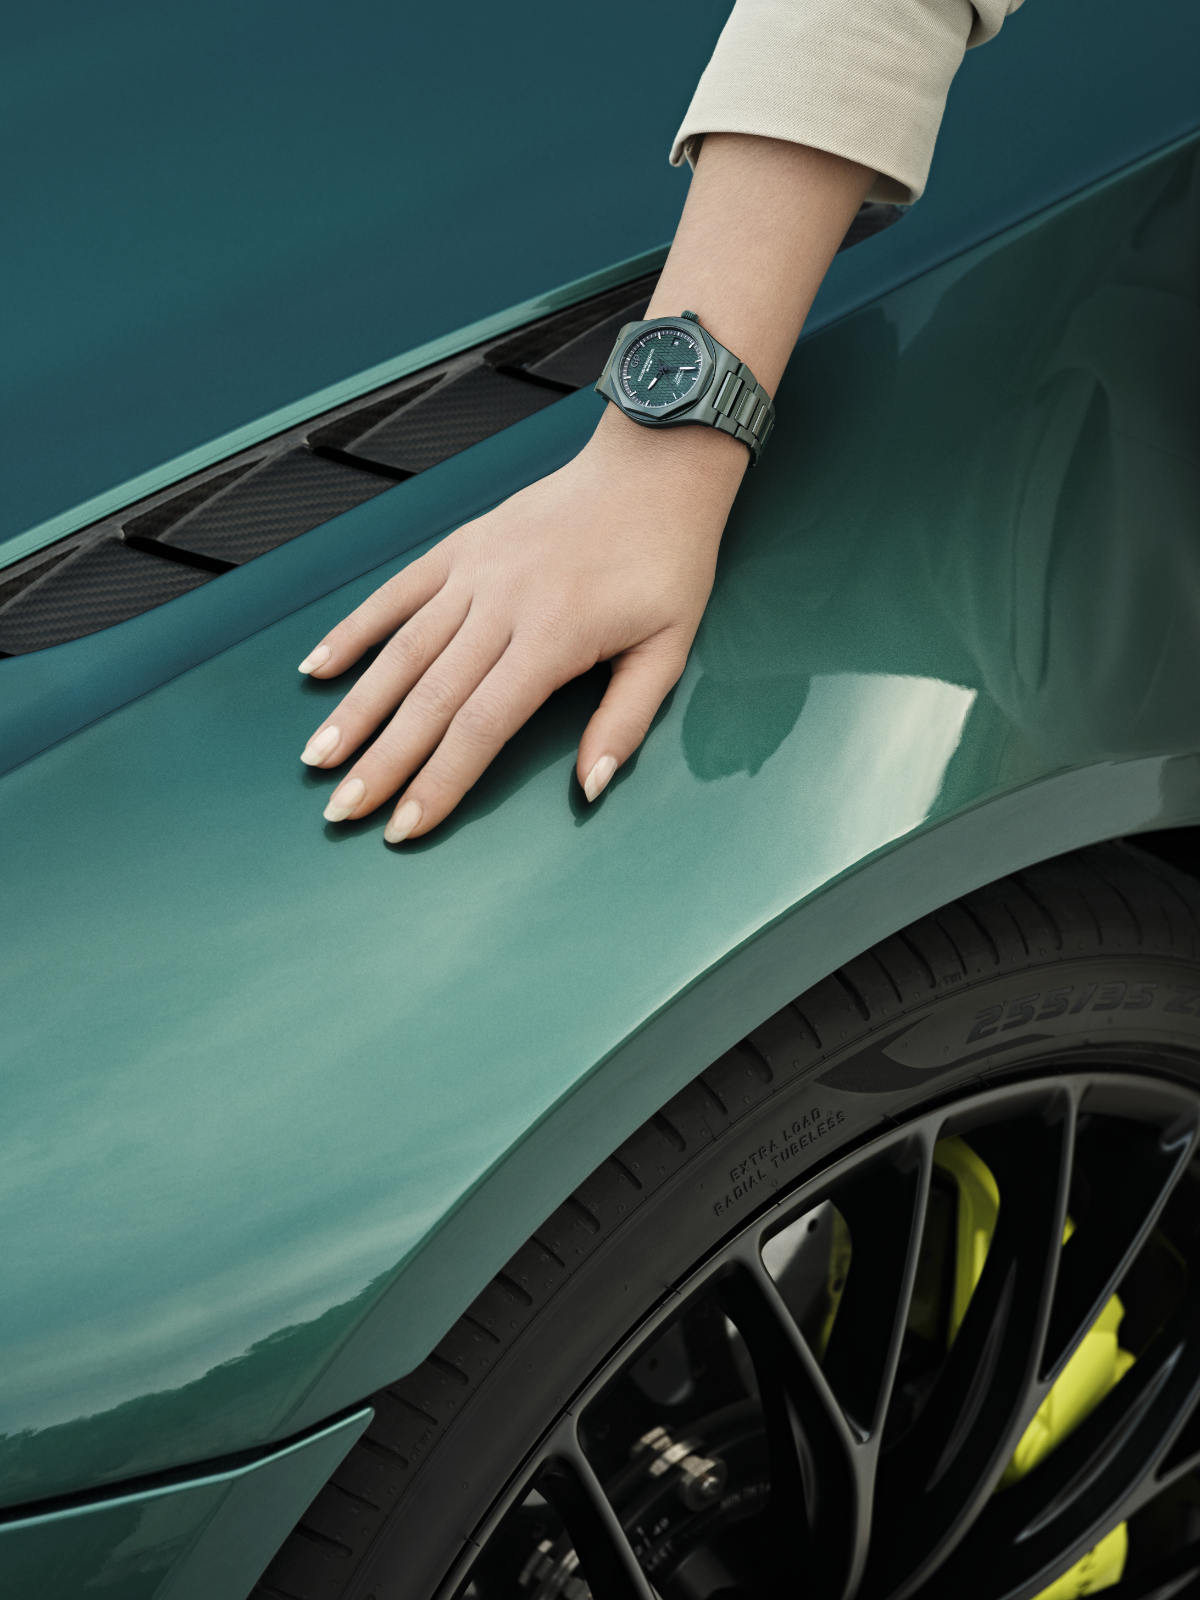 Girard-Perregaux Unveils Its New Laureato Green Ceramic Aston Martin Edition Watch